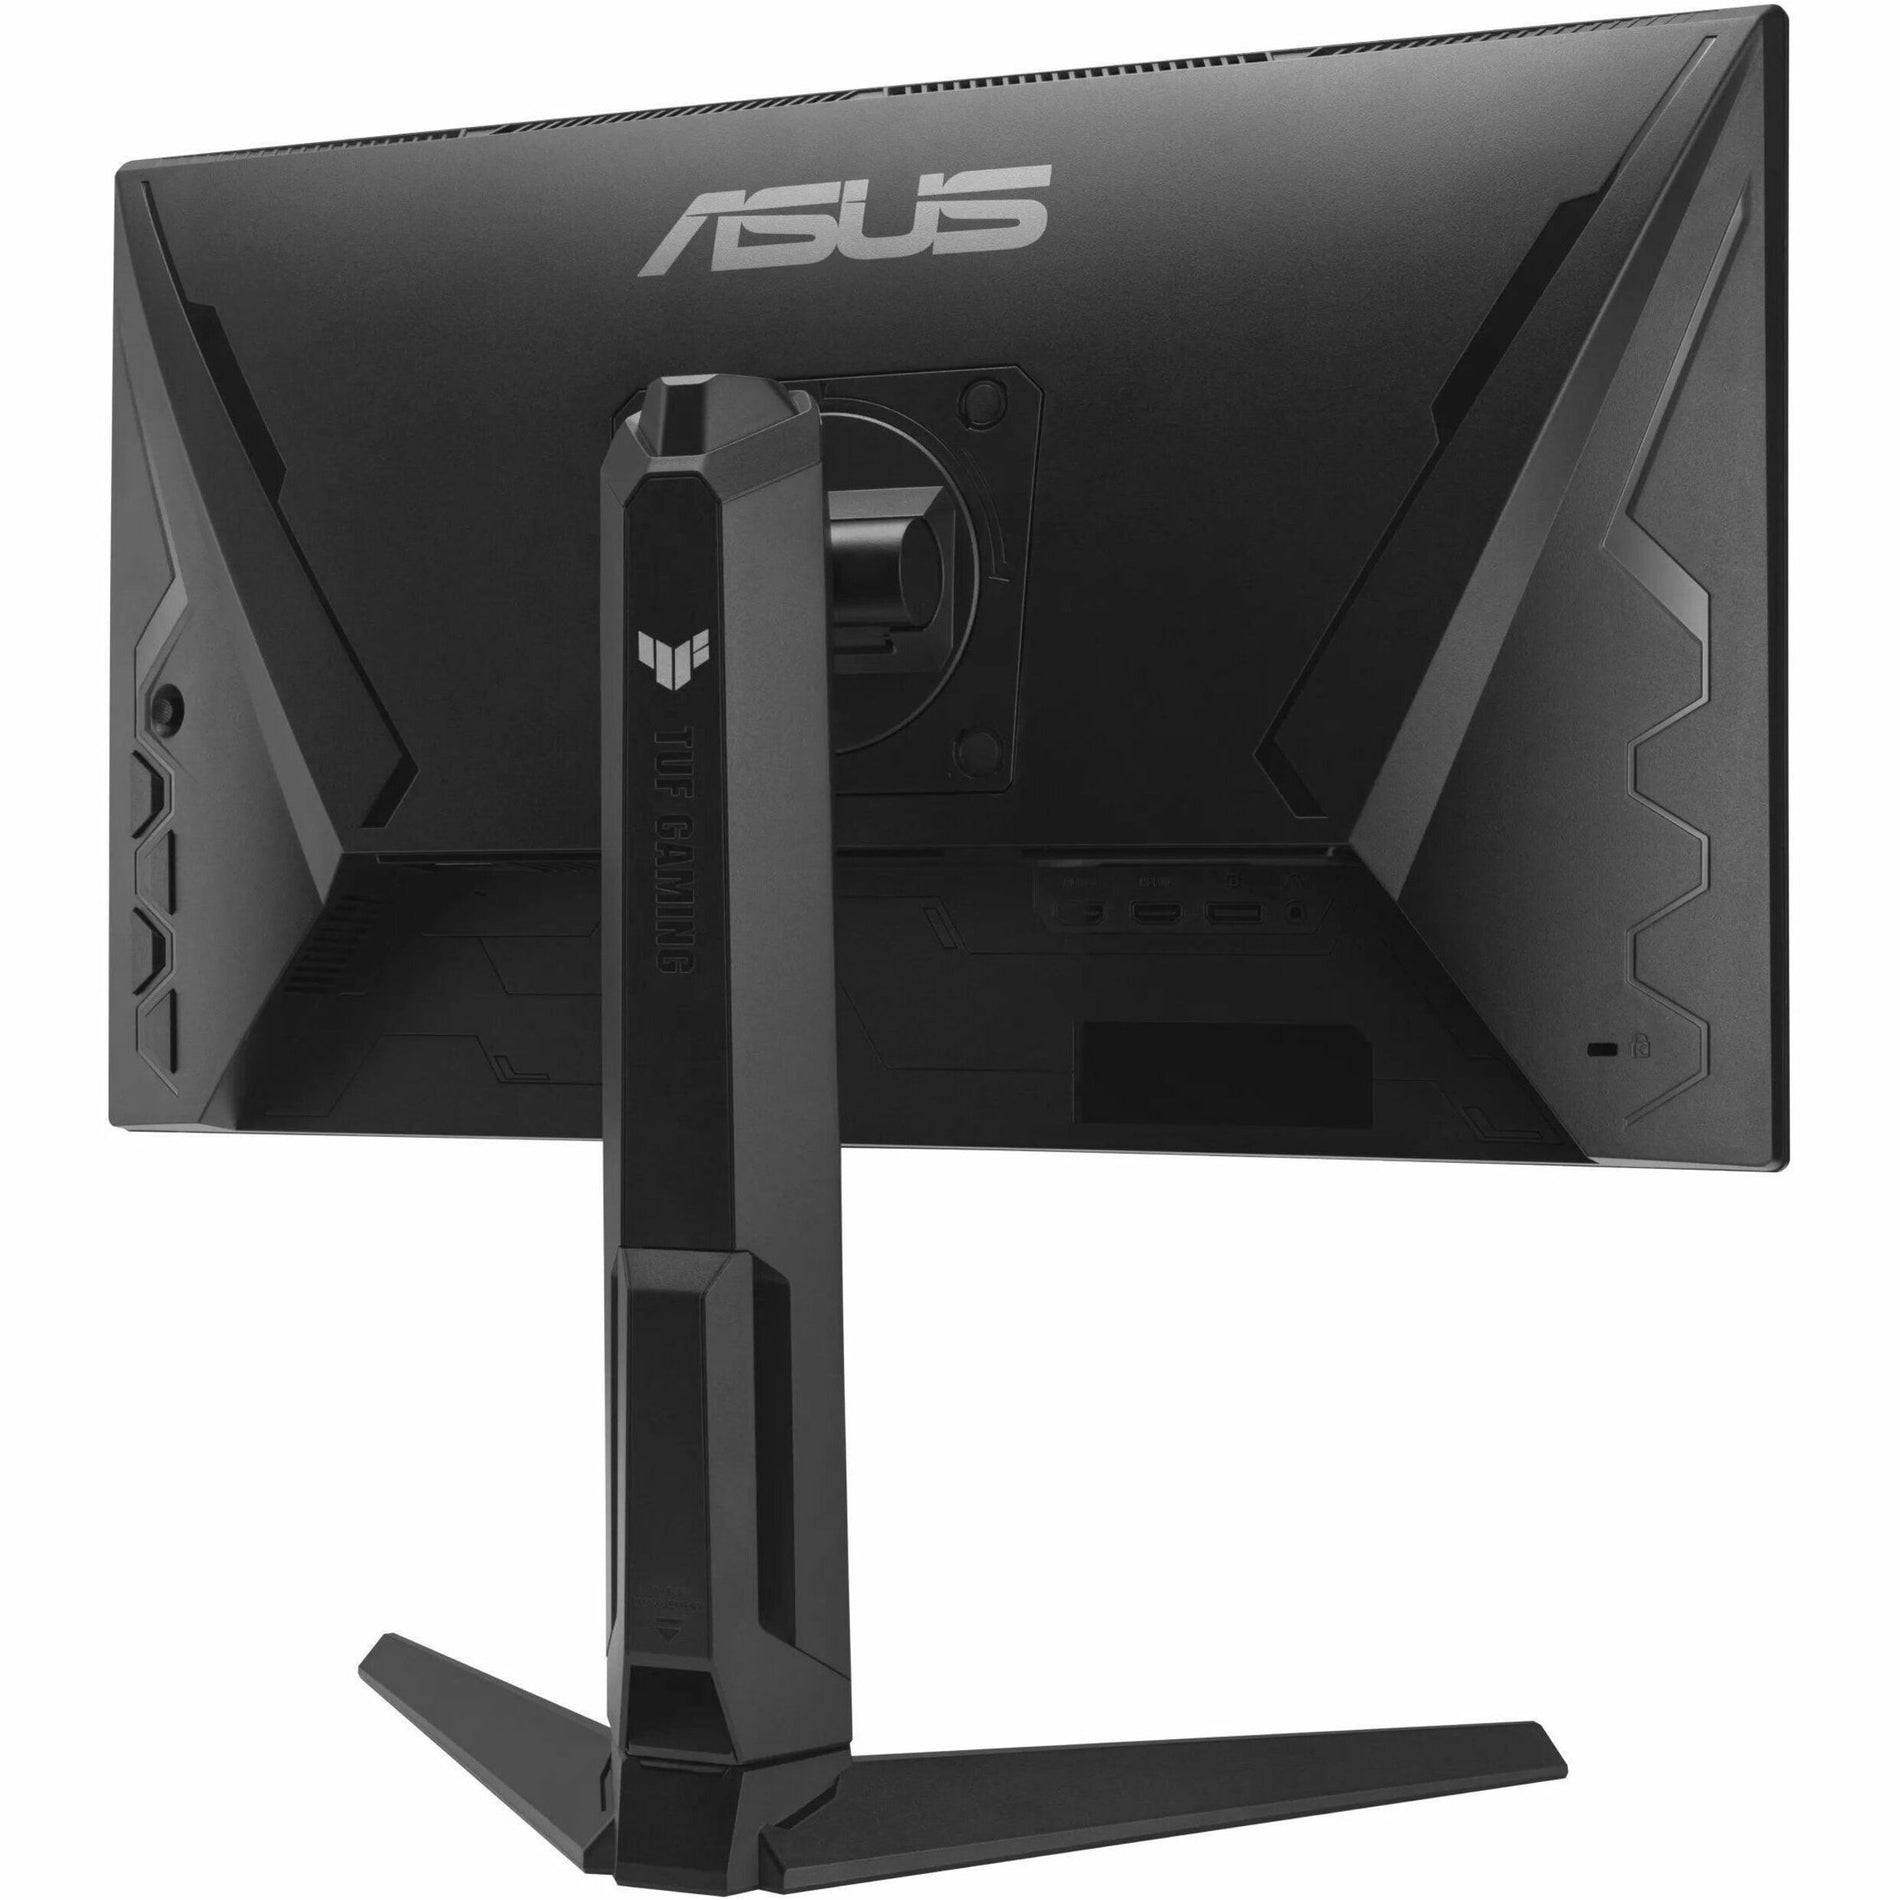 ASUS VG249QL3A TUF Gaming LED Monitor, 24" Full HD, 180Hz Refresh Rate, Adaptive Sync, 1ms Response Time, HDMI/DisplayPort